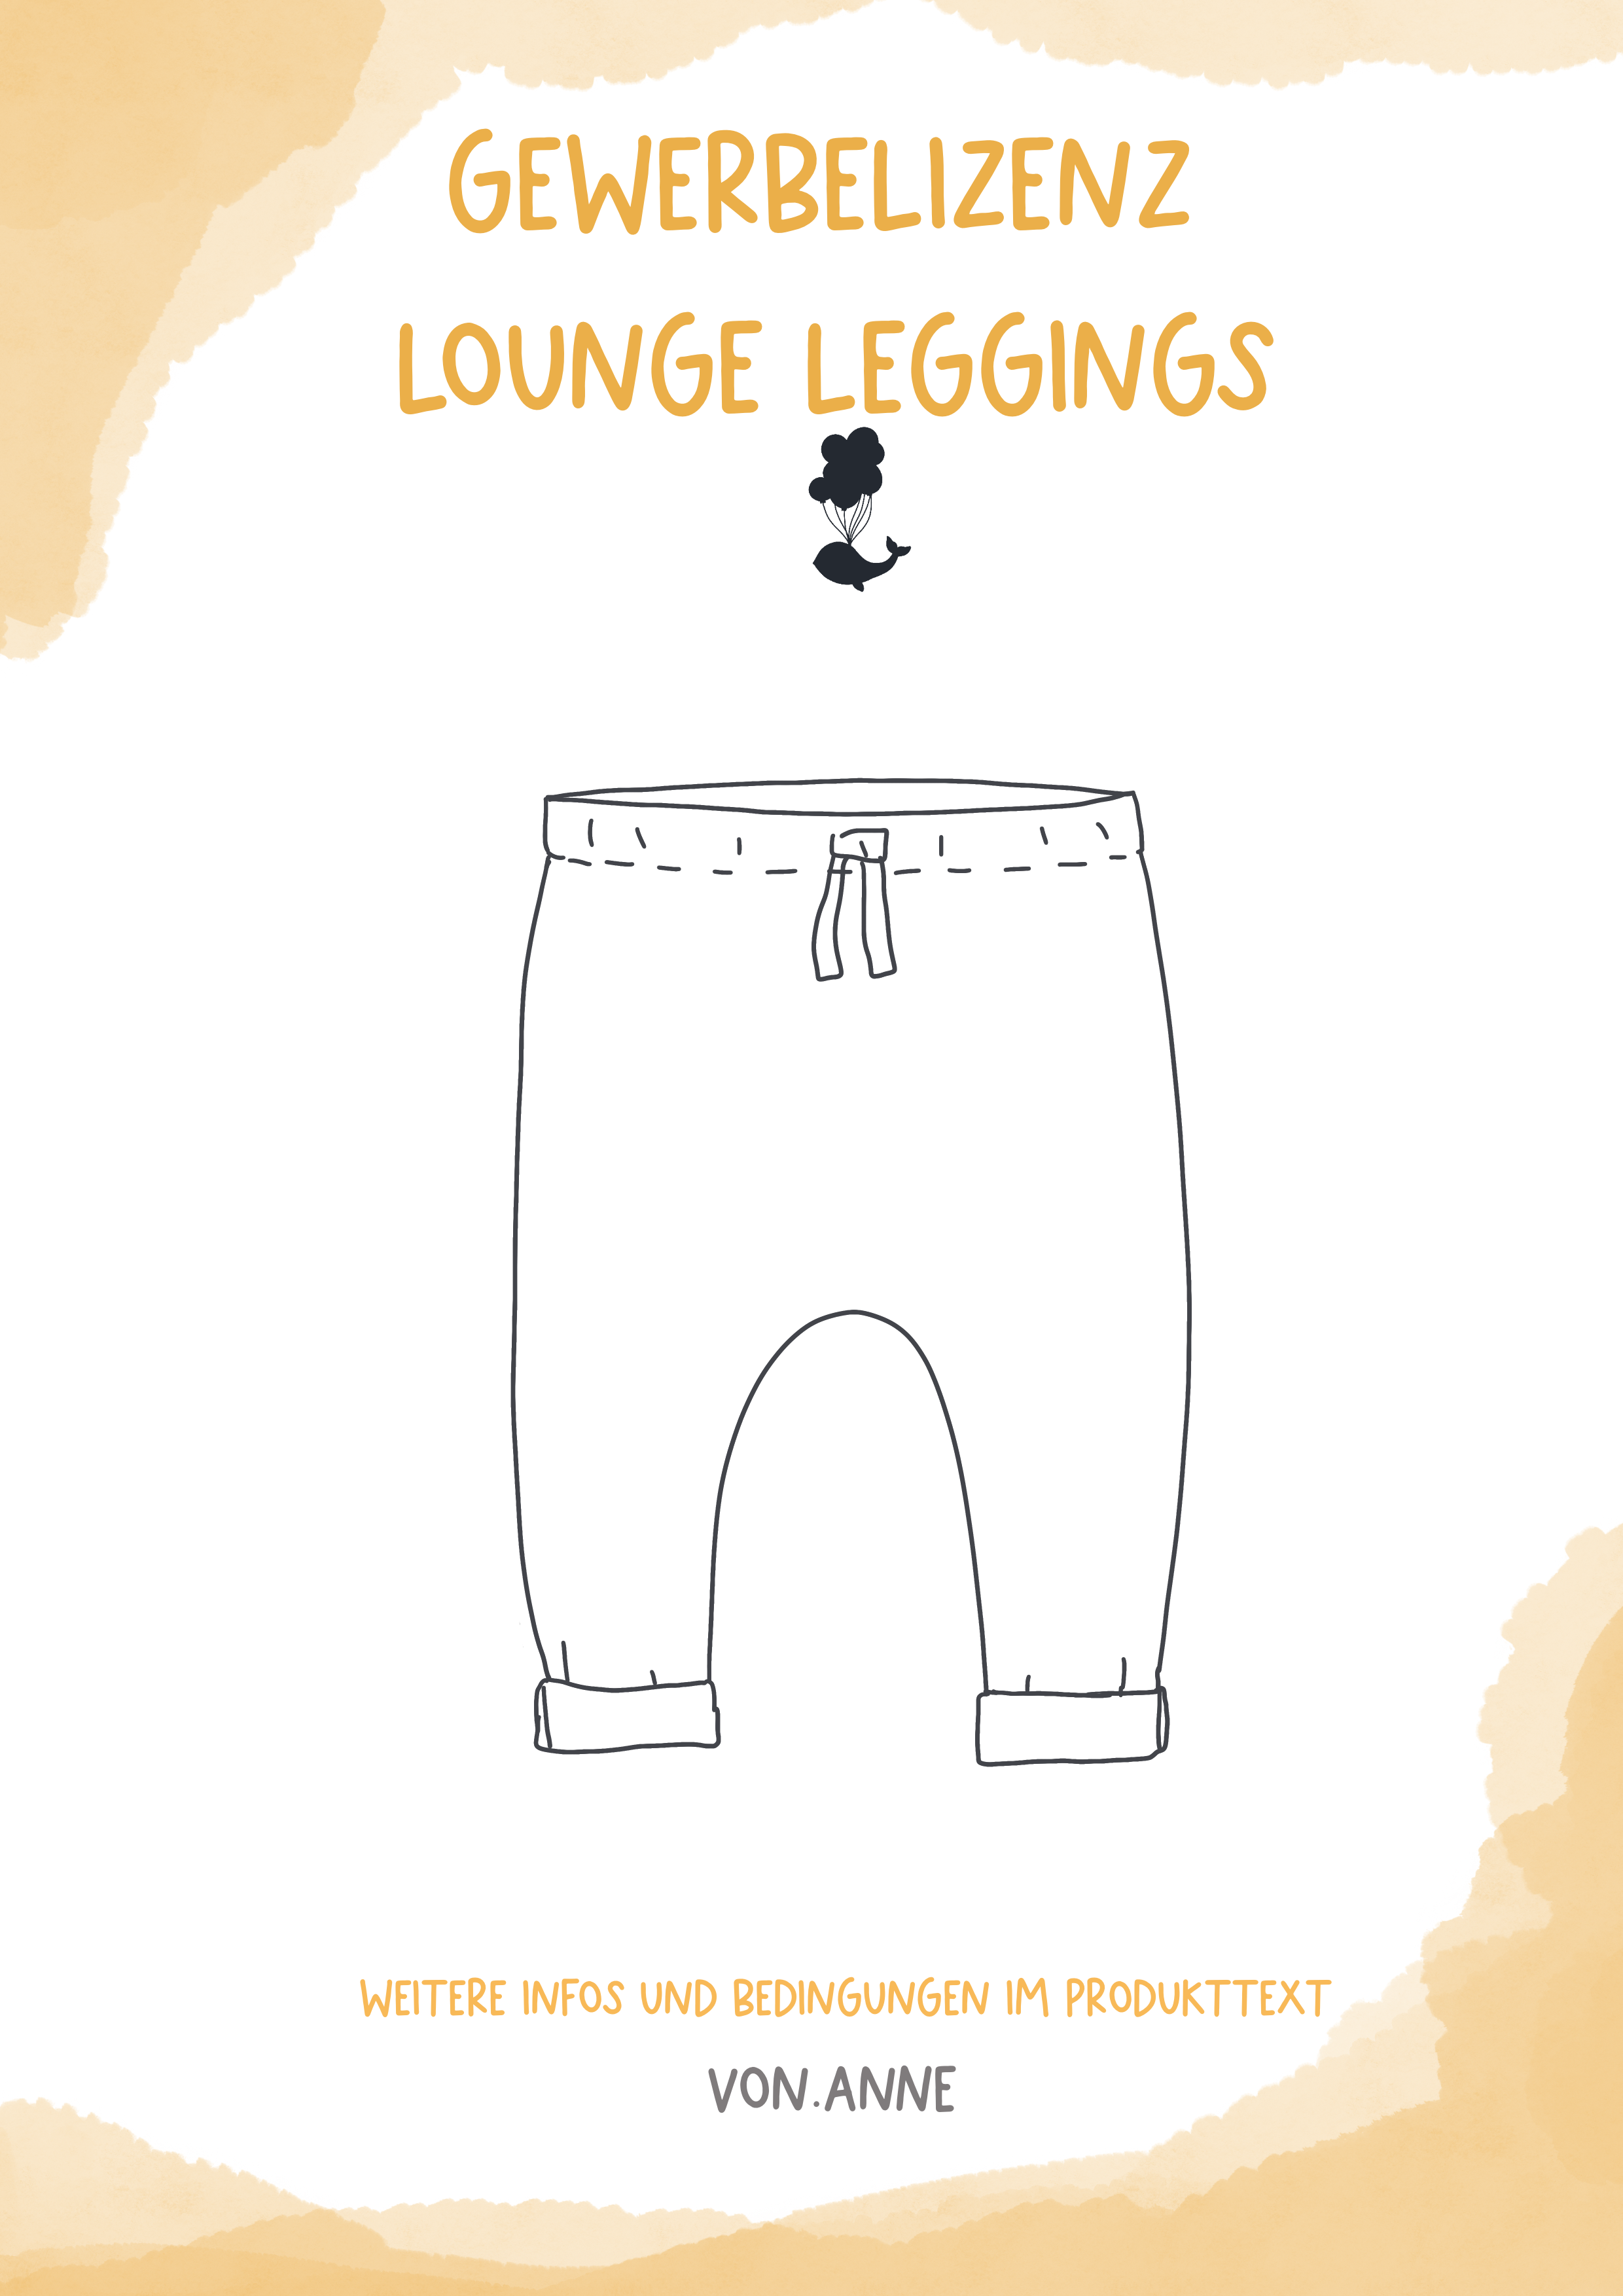 Gewerbelizenz - Lounge Leggings